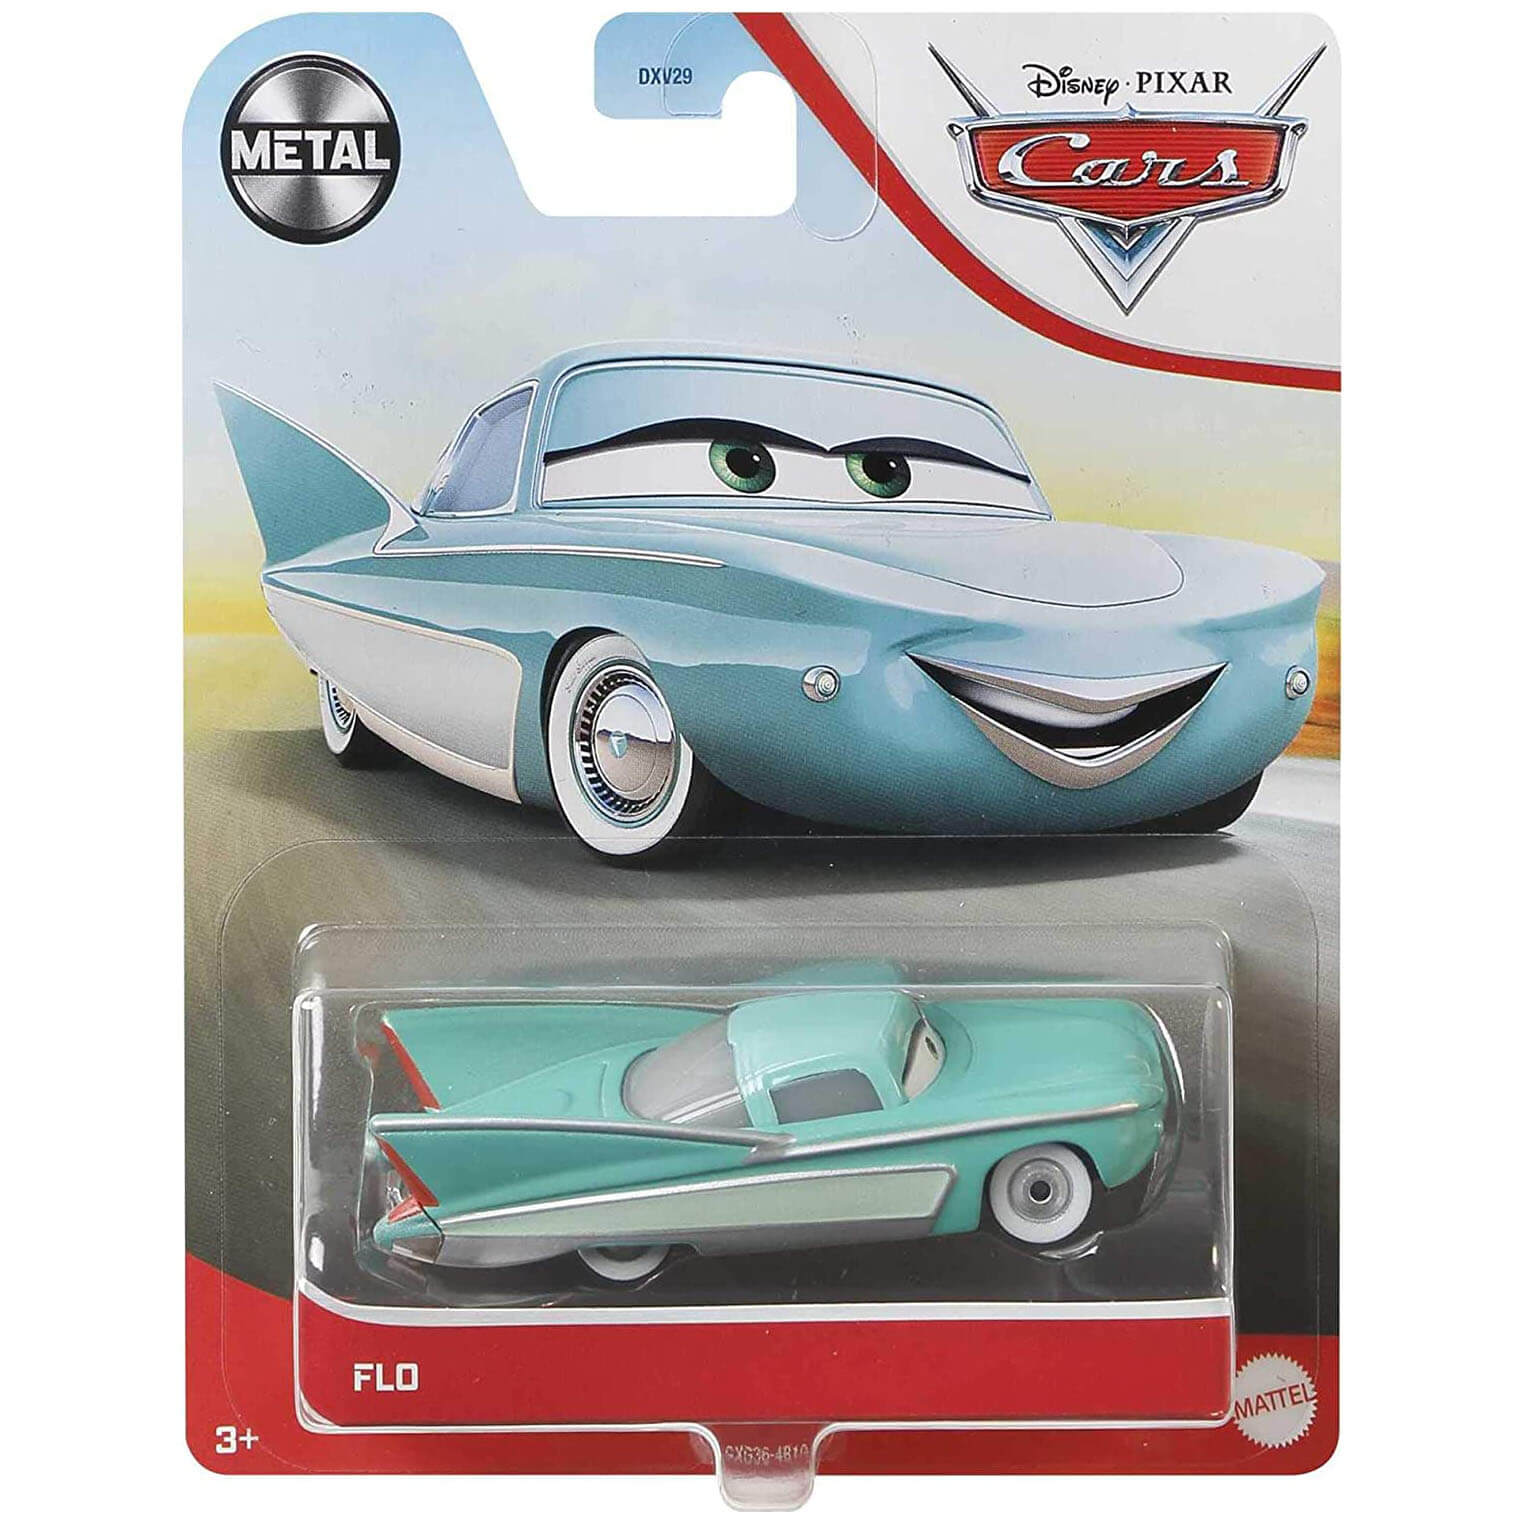 Disney Pixar Cars Flo 1:55 Scale Diecast Vehicle